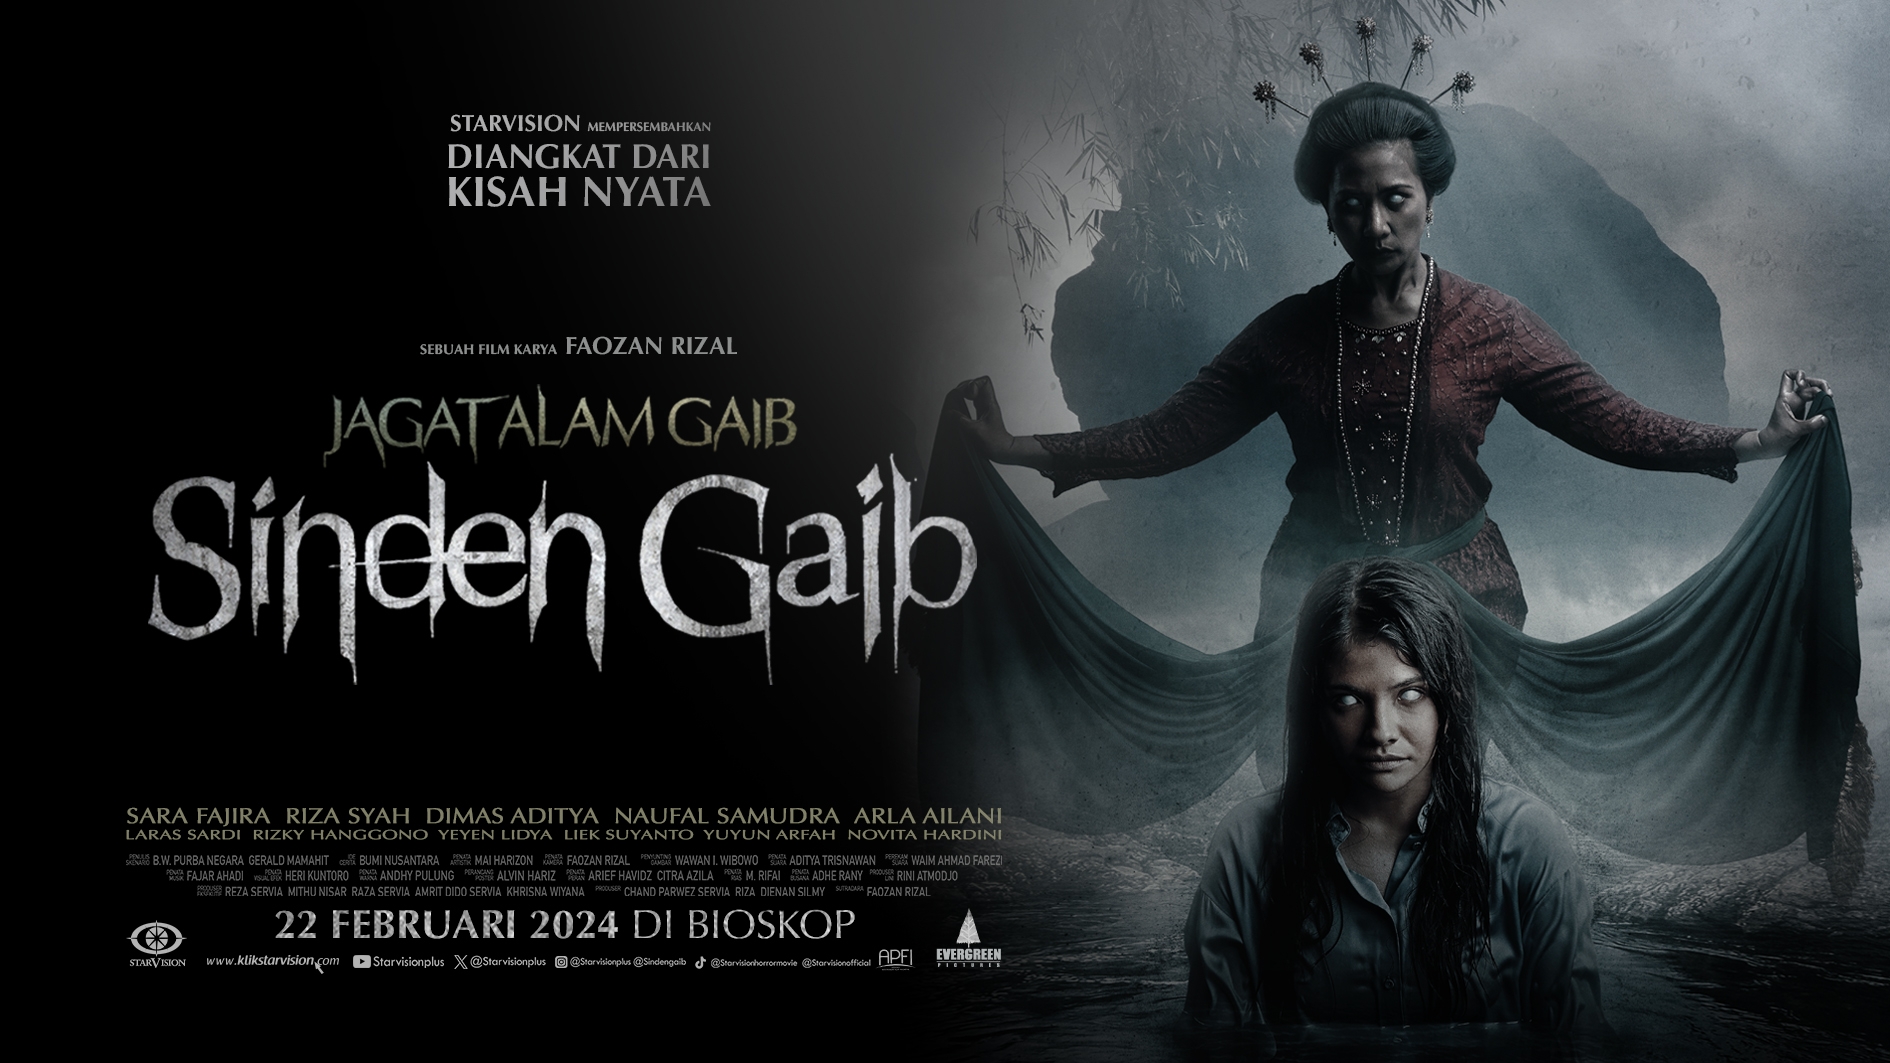 LANDSCAPE Official Poster SINDEN GAIB